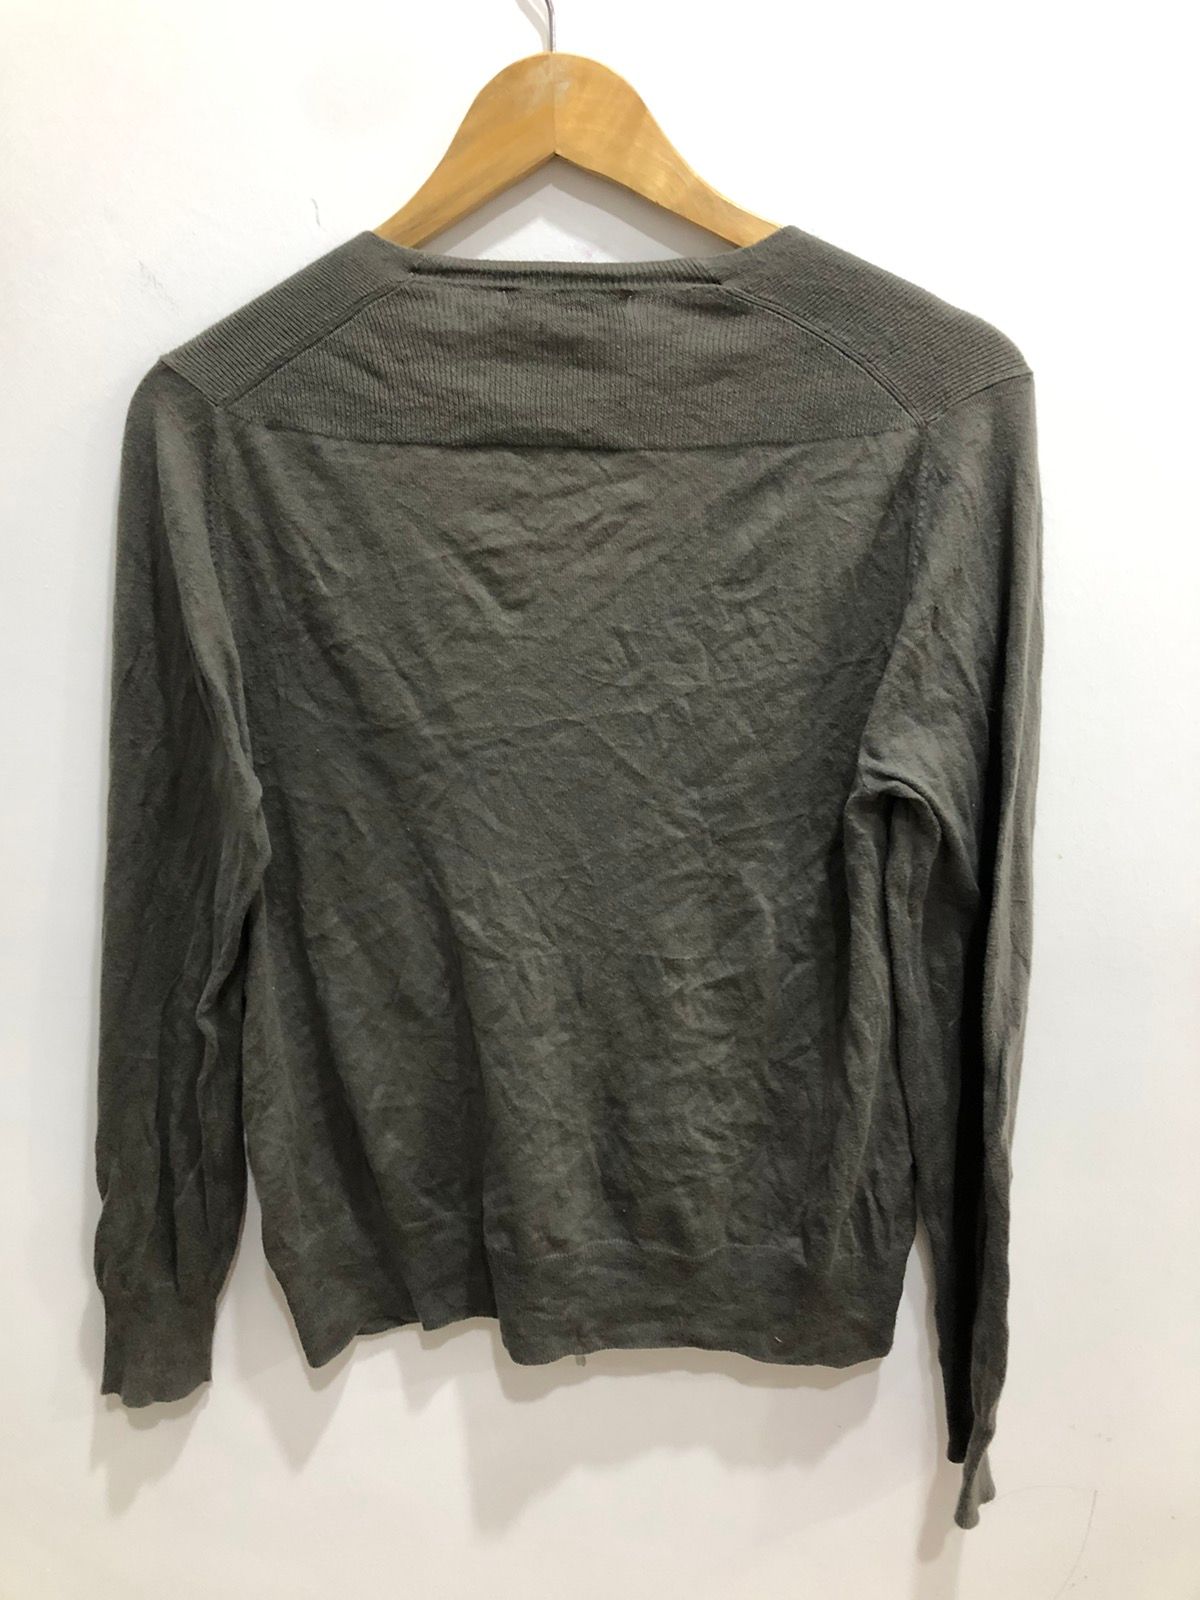 Ys for Living Cardigan Button Ups Kniterar Sweater - 9